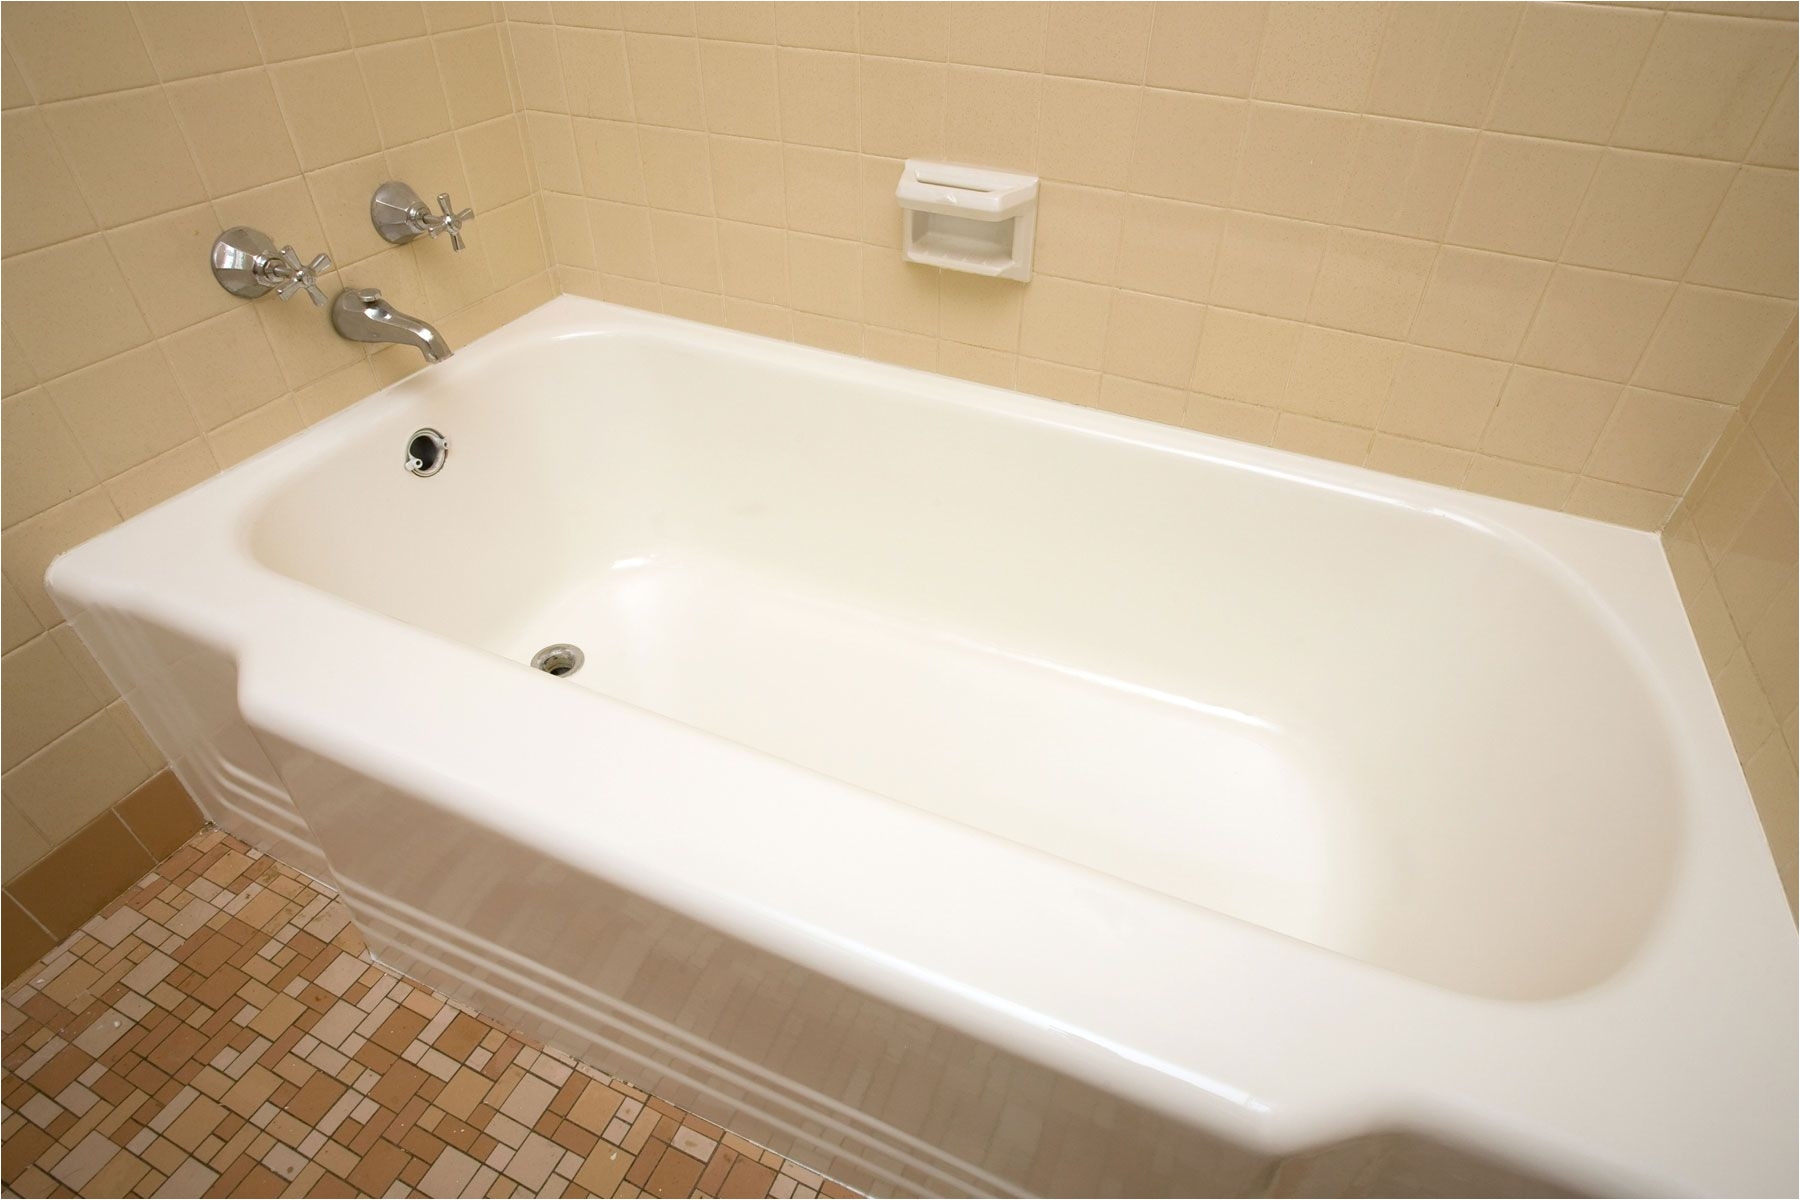 resurfacing bathtubs awesome bathtub refinishing bedroom furniture pinterest